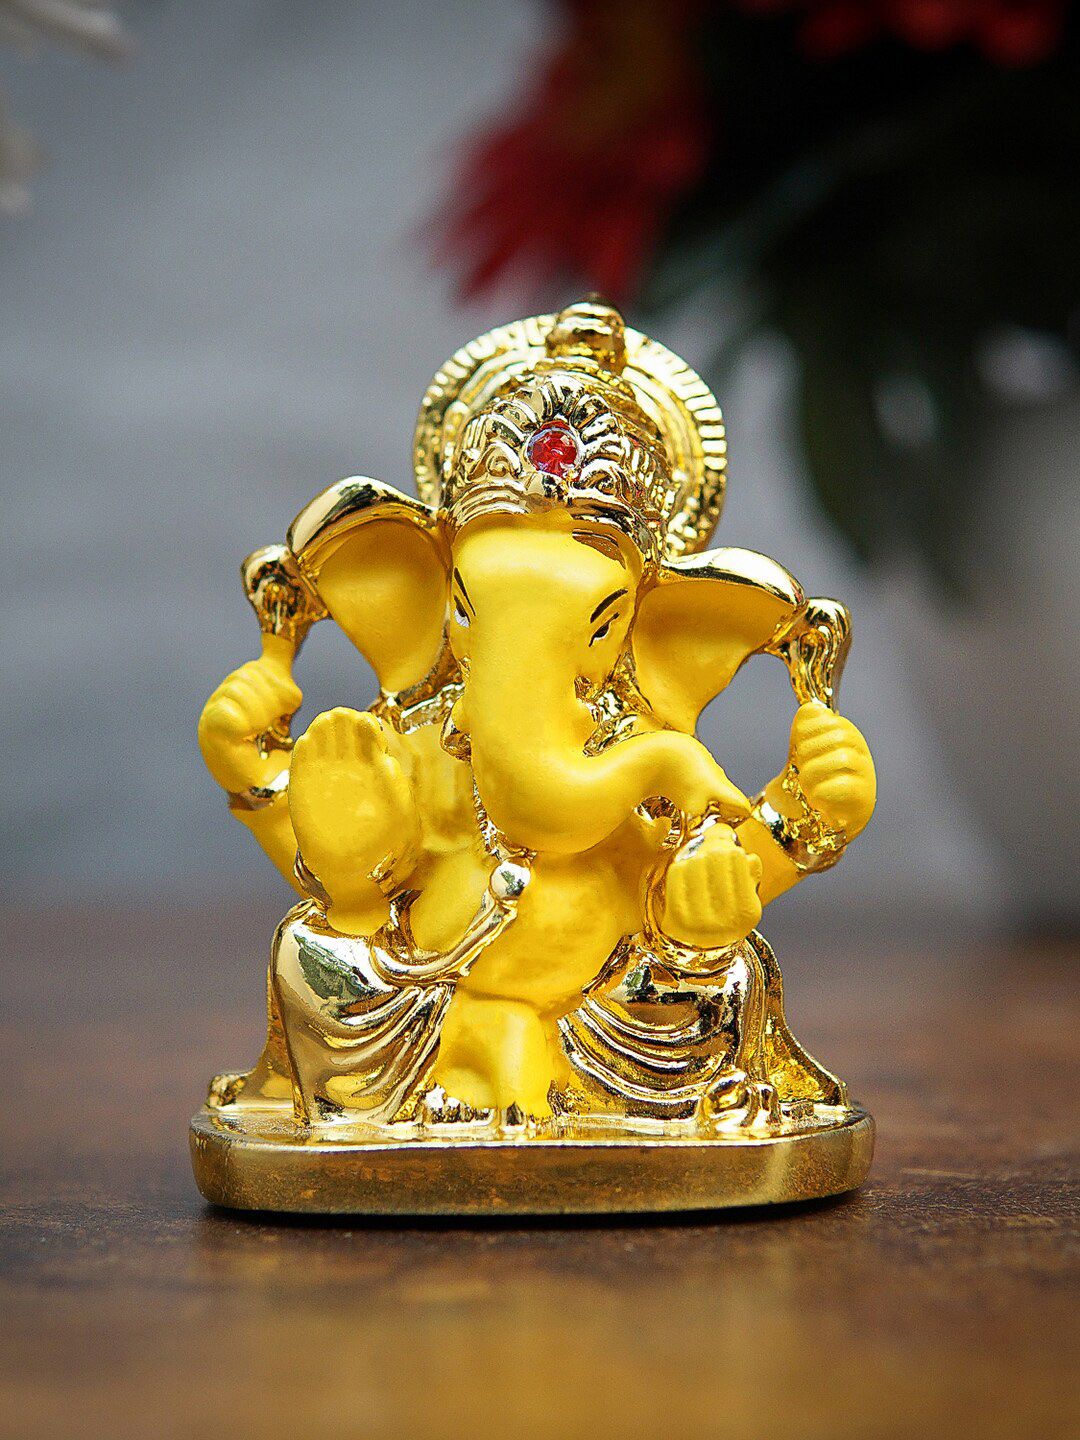 StatueStudio Gold-Toned & Yellow Ganesha Idol Showpiece Price in India